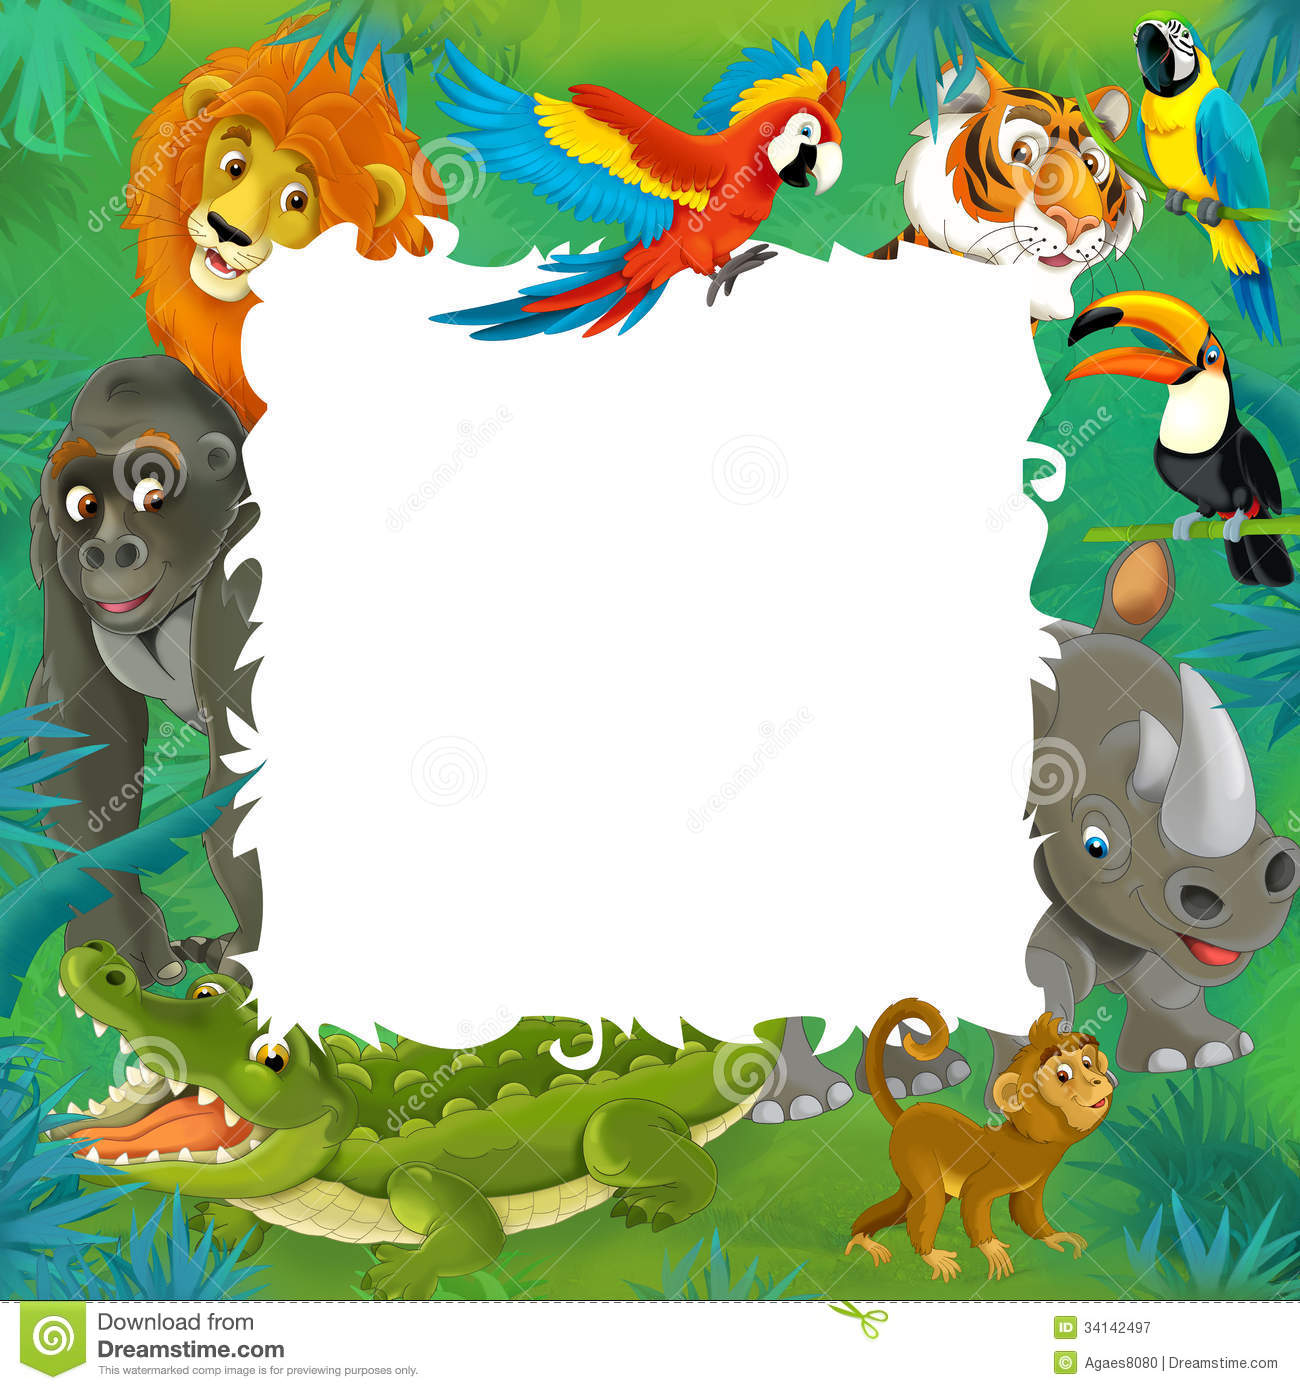 Cartoon Safari   Jungle   Frame Royalty Free Stock Photography   Image